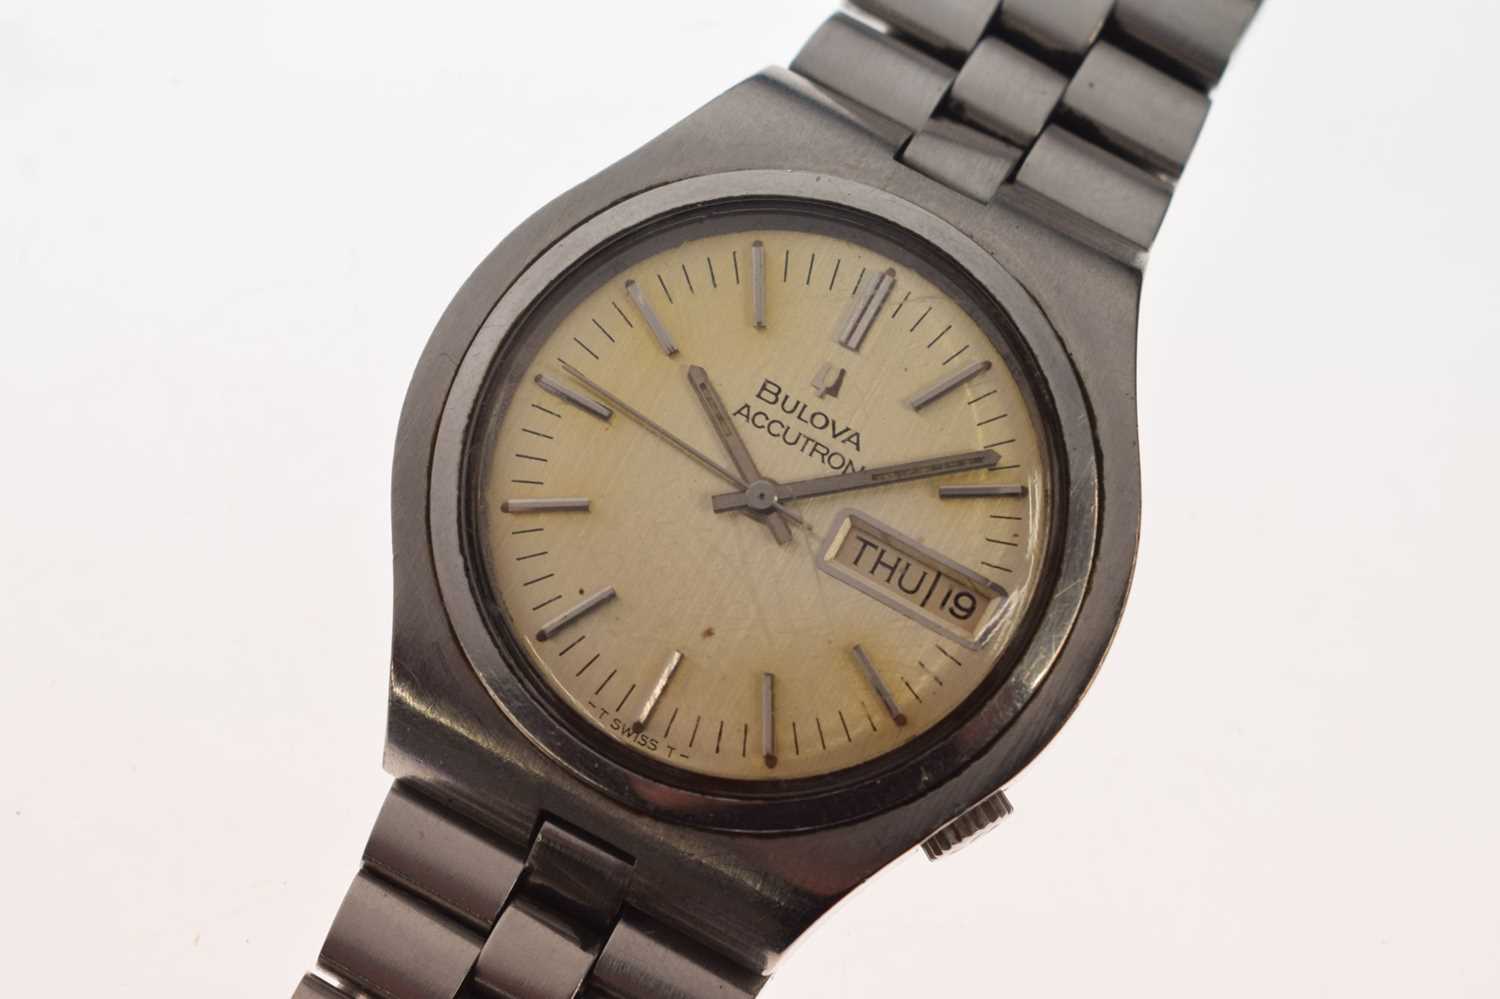 Bulova Accutron - Gentleman's 1970s stainless steel bracelet watch - Image 3 of 9